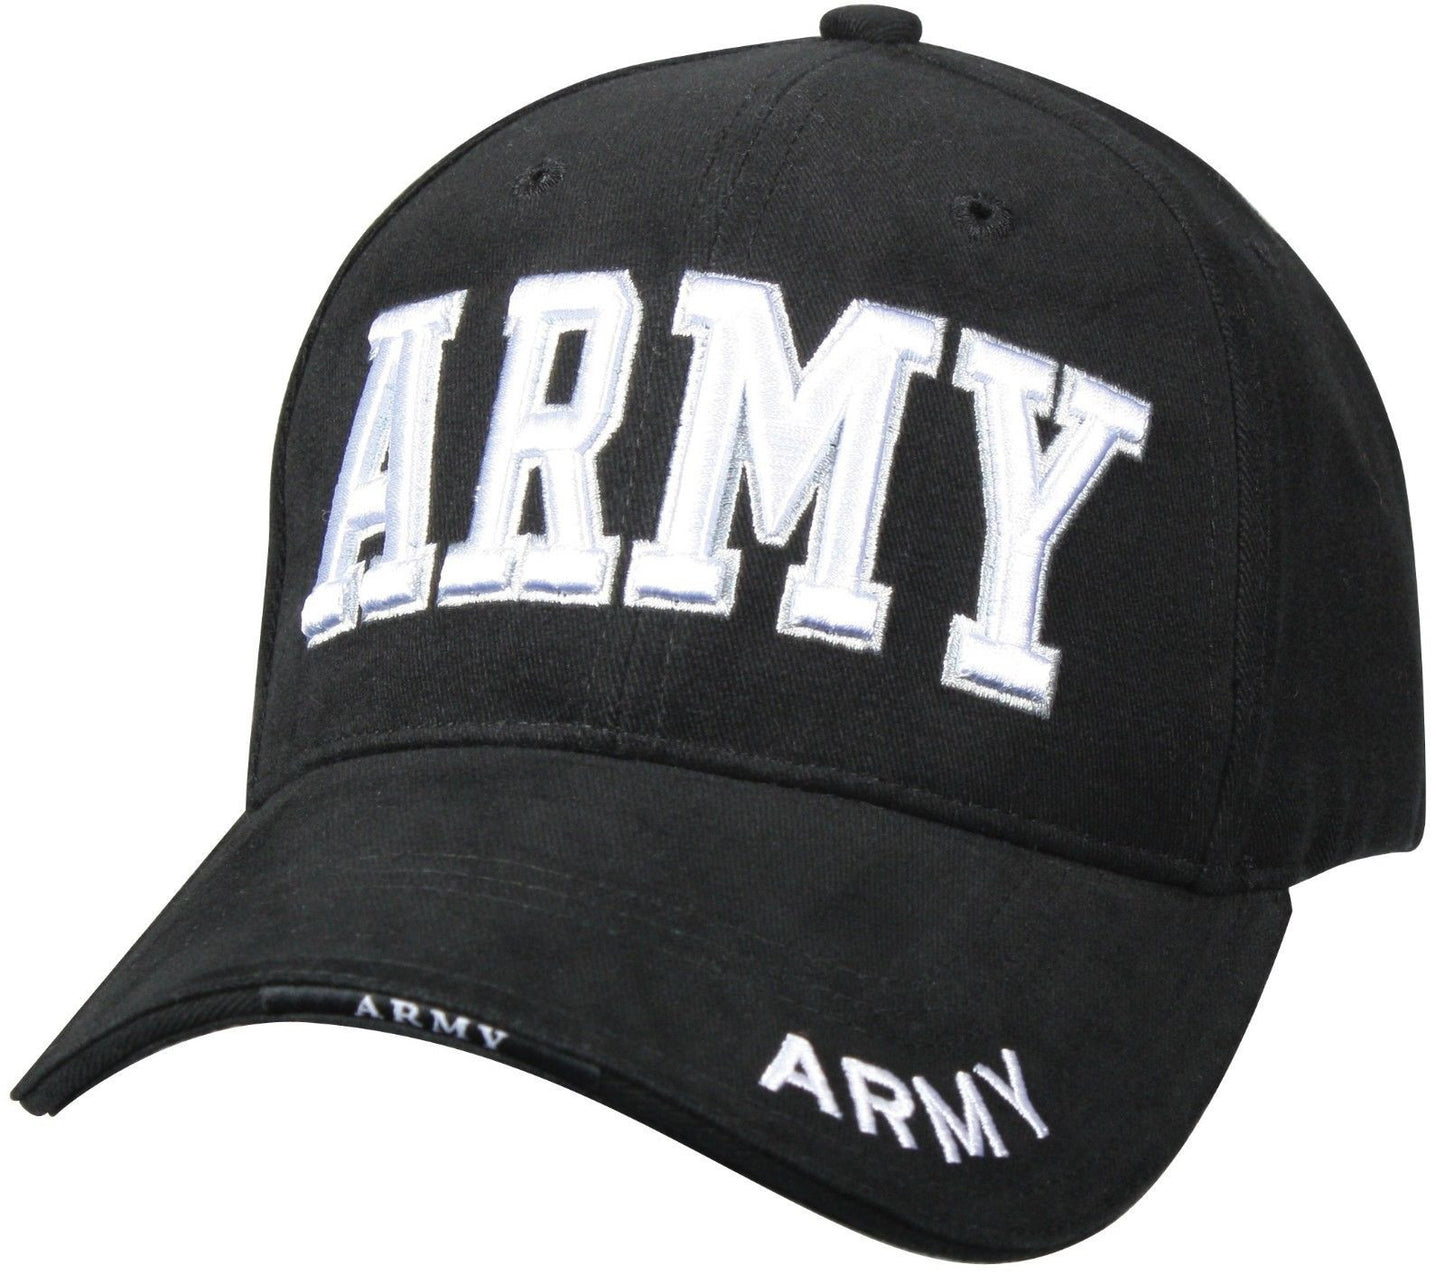 "ARMY" Black Hat - Deluxe Baseball Cap